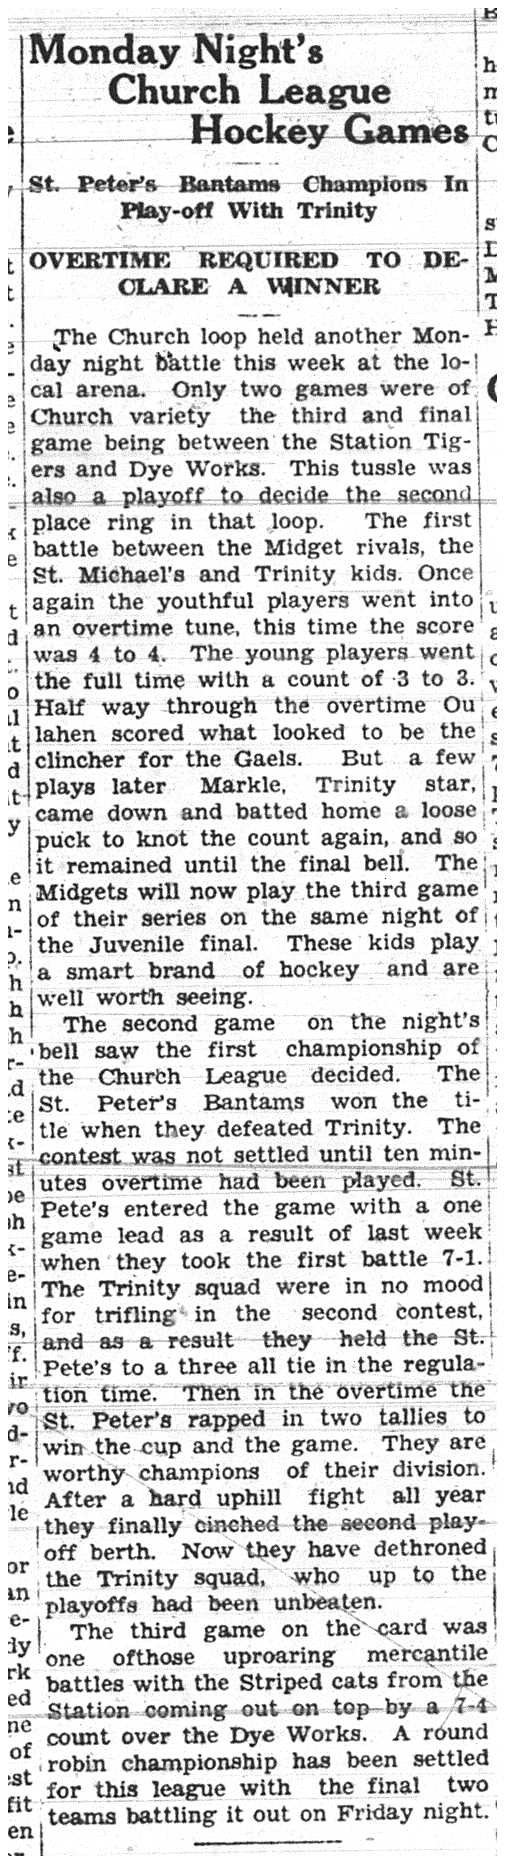 1938-03-10 Hockey -CCHL playoffs